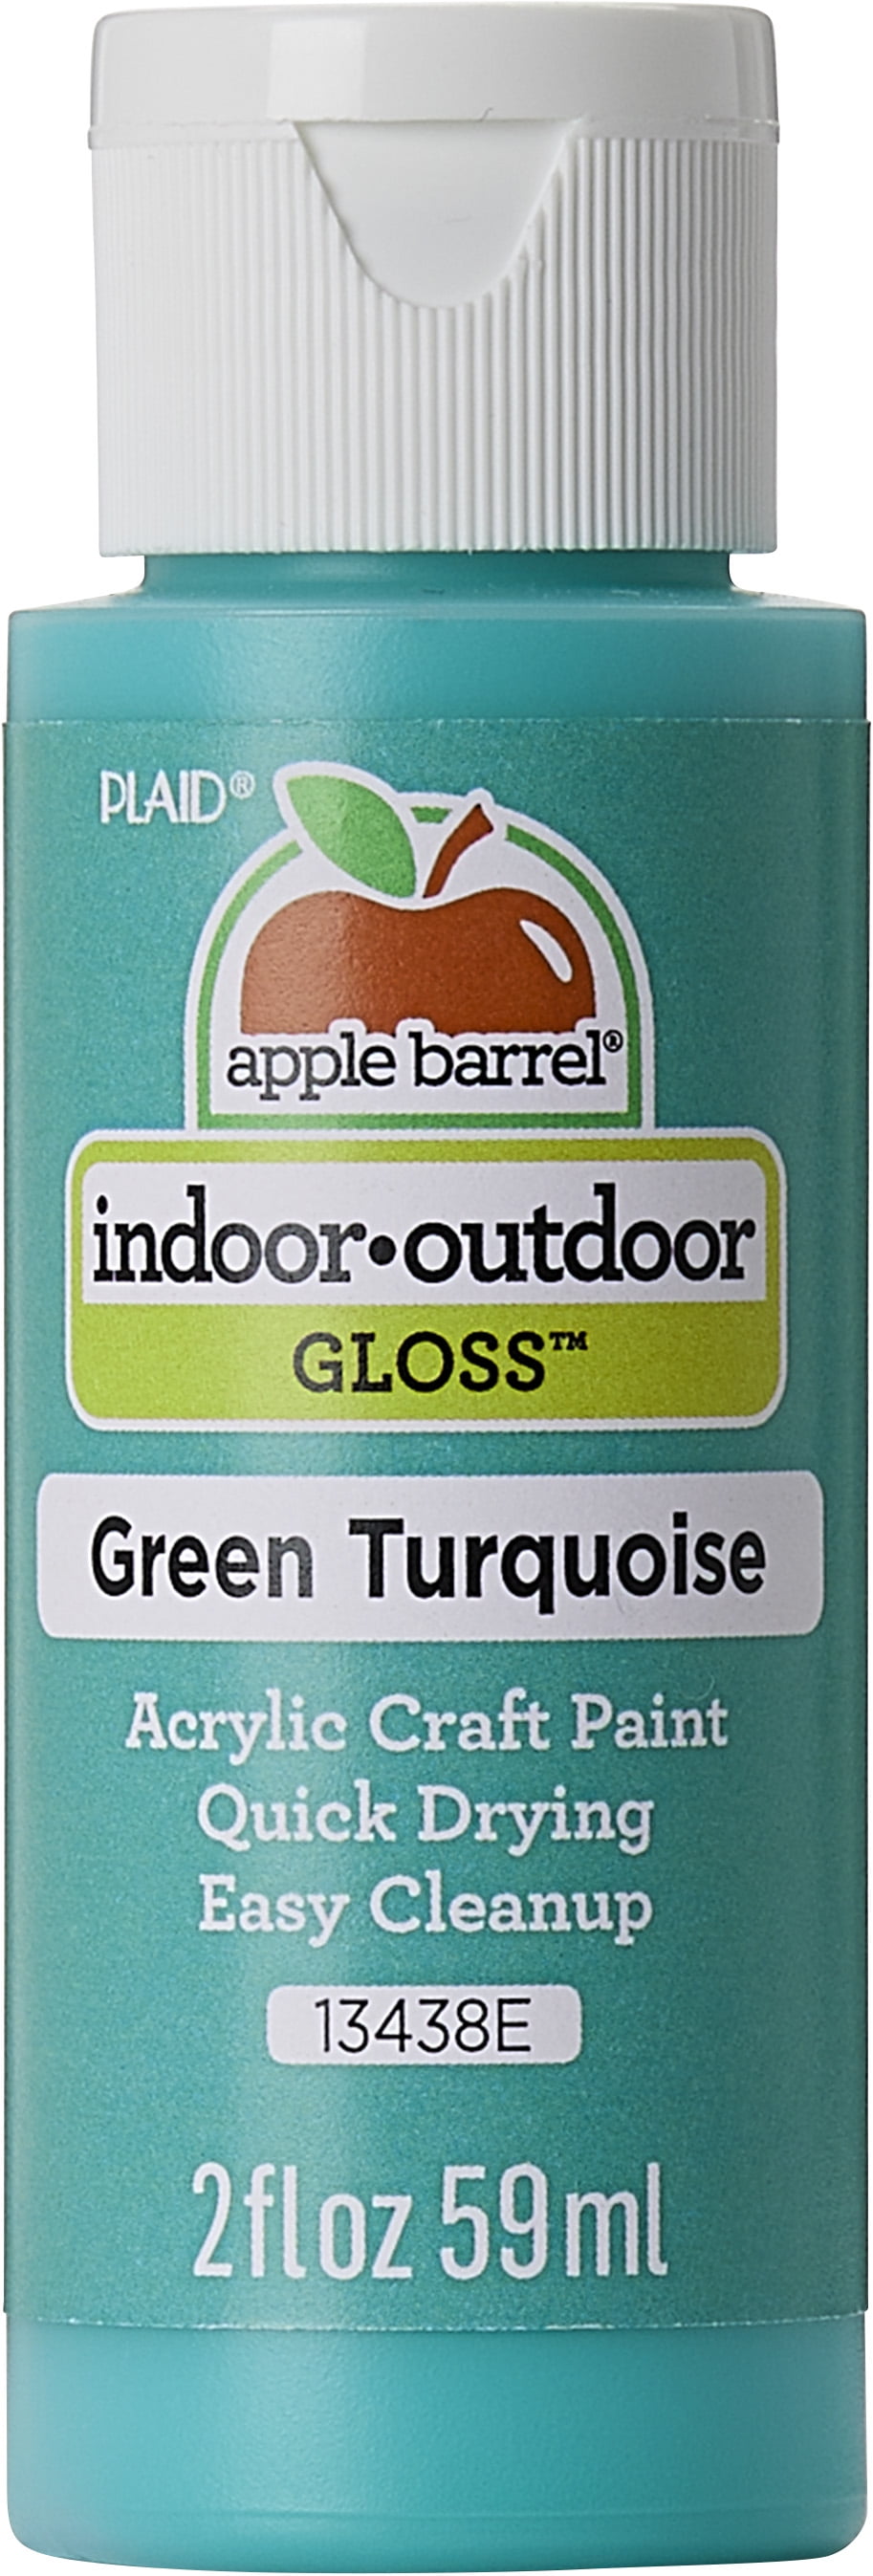 Apple Barrel Acrylic Craft Paint, Gloss Finish, Green Turquoise, 2 fl oz